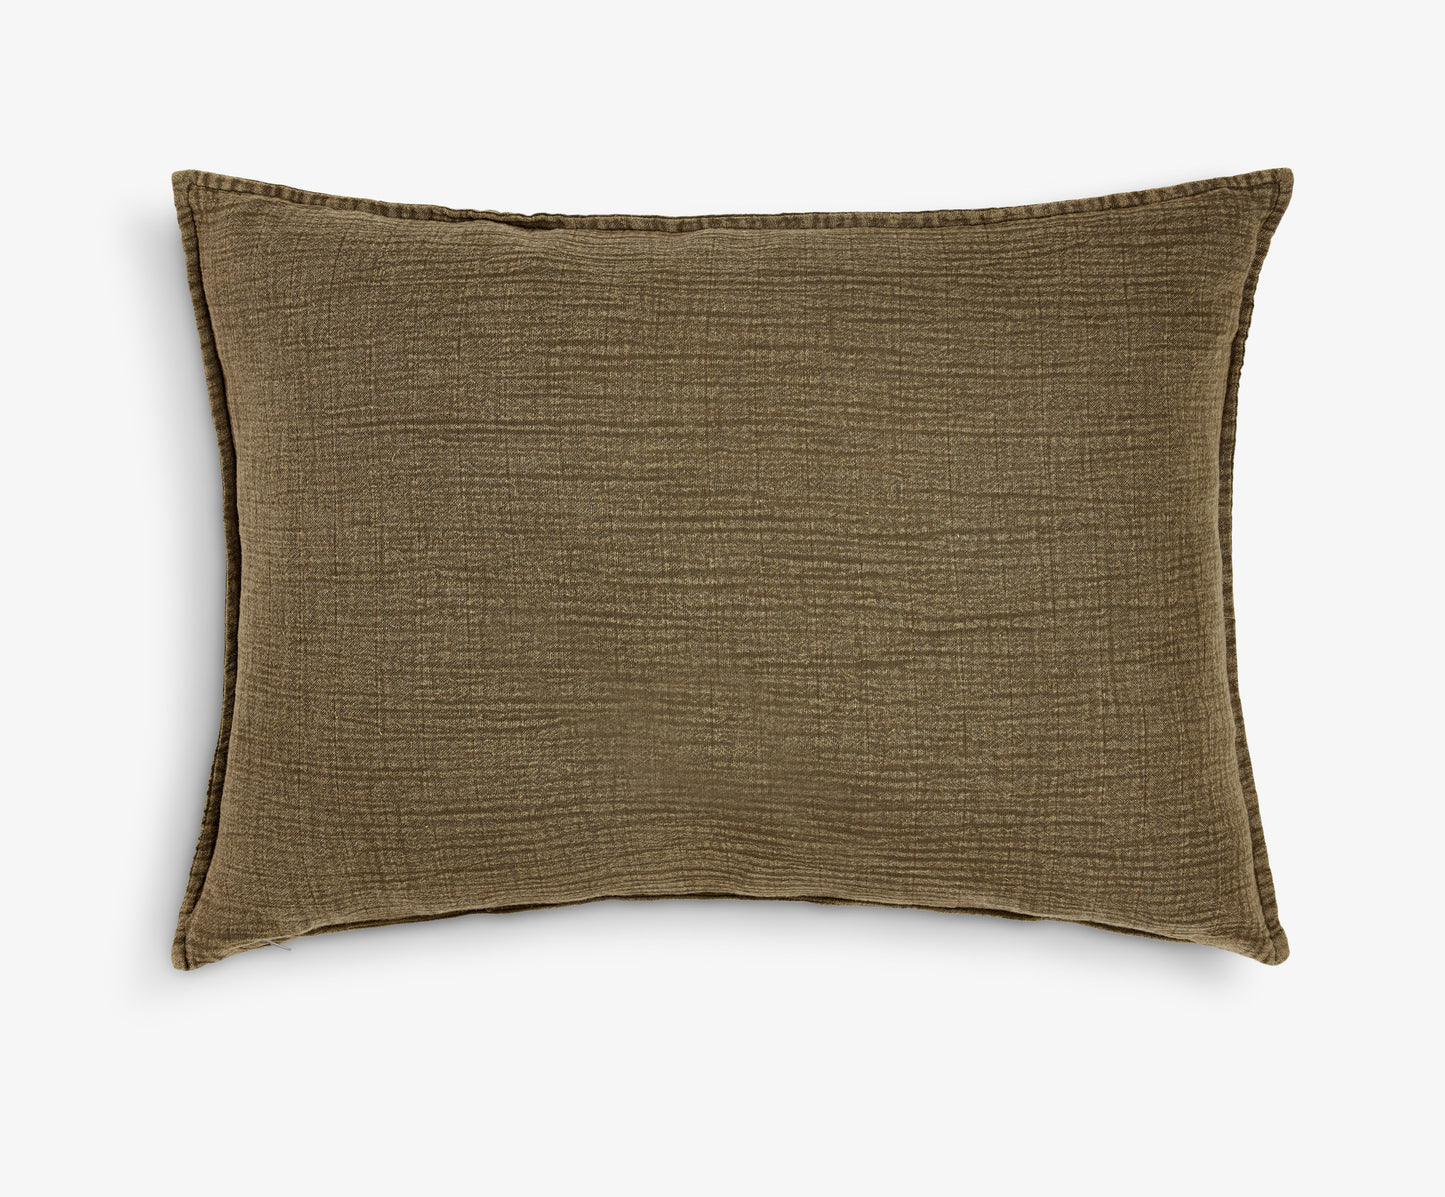 Large Lumbar Khaki Green Cushion